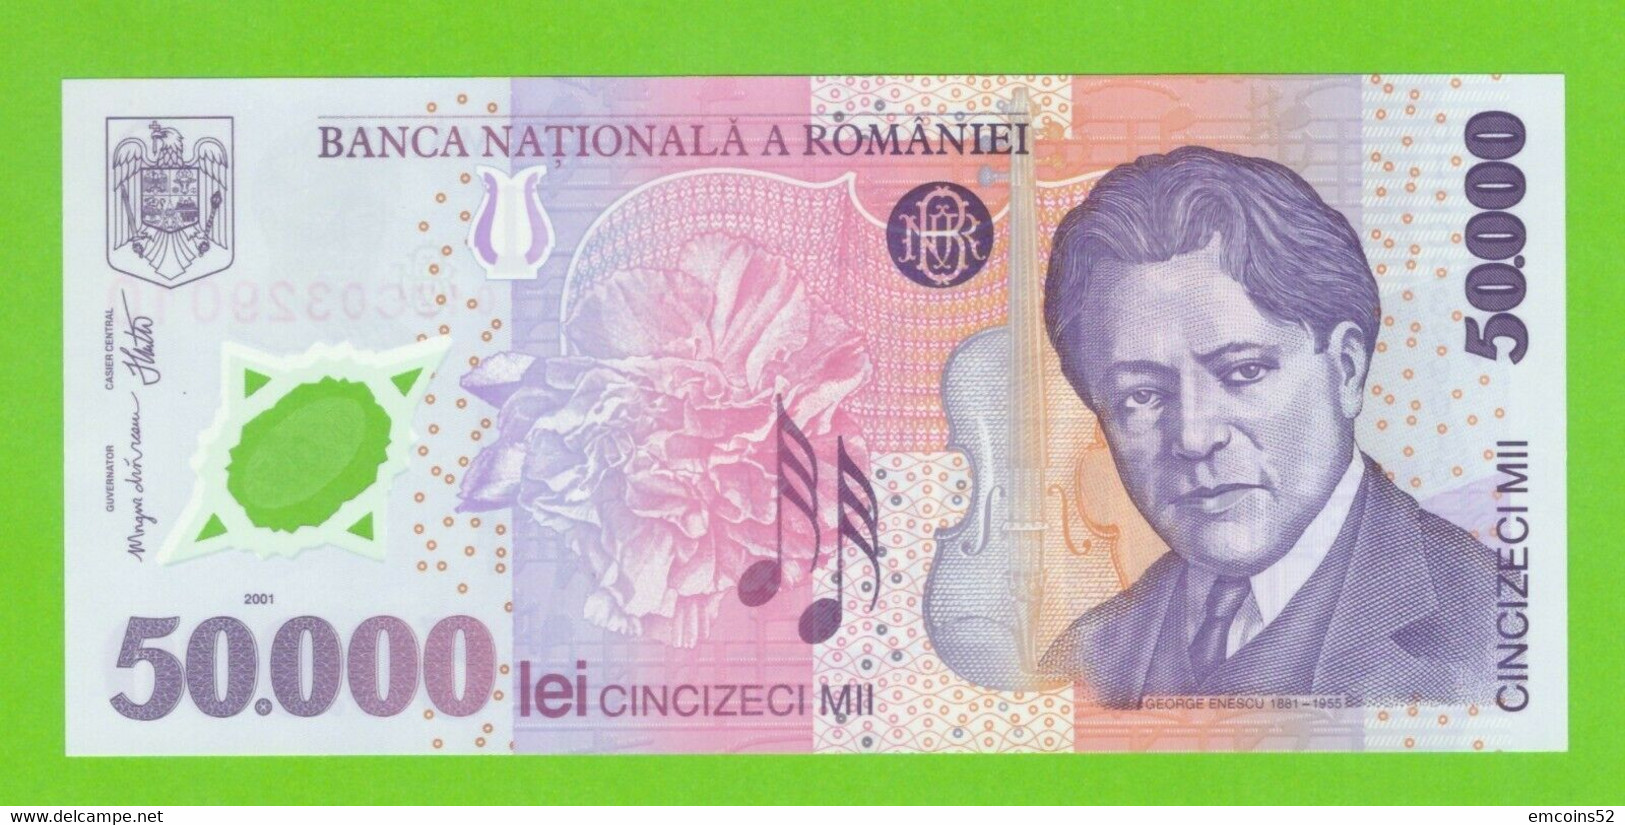 ROMANIA 50000 LEI 2001  P-113a  UNC - Rumänien